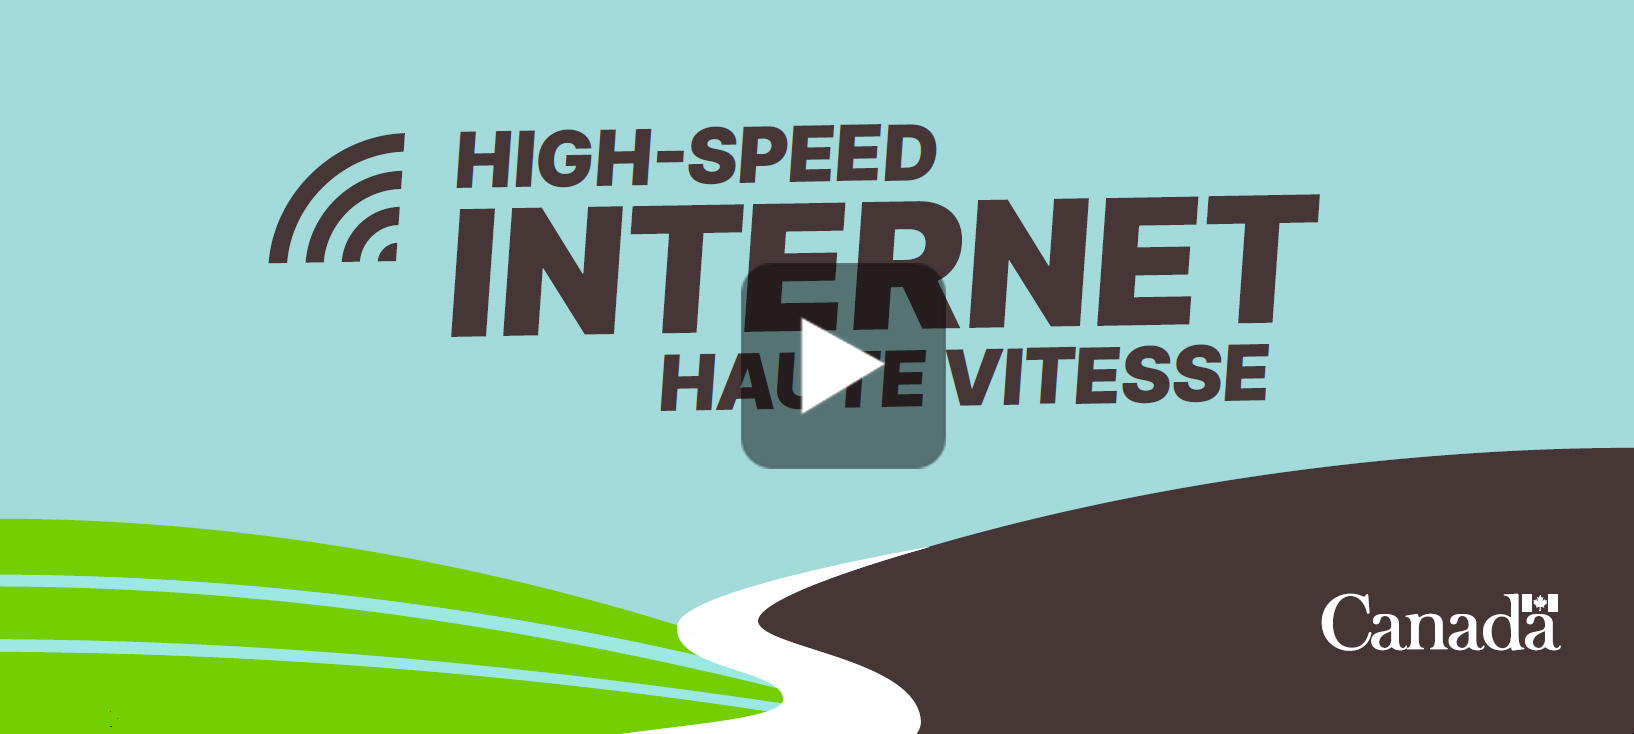 Canada's progress towards universal high-speed Internet access
      